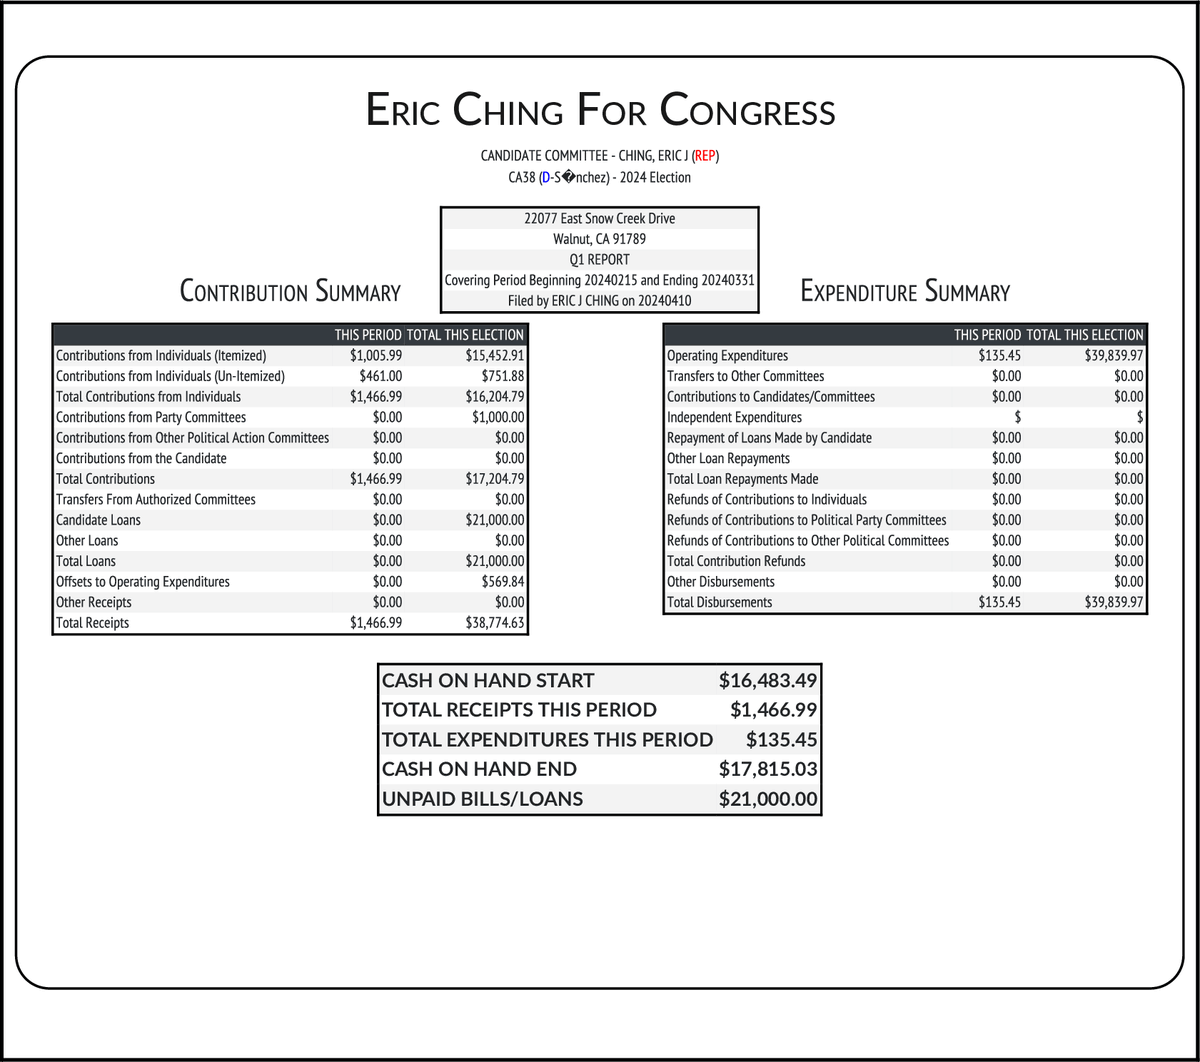 NEW FEC F3
CHING, ERIC J (REP) #CA38

RCPT $1,467
EXPN $135
COH $17,815
docquery.fec.gov/cgi-bin/forms/…